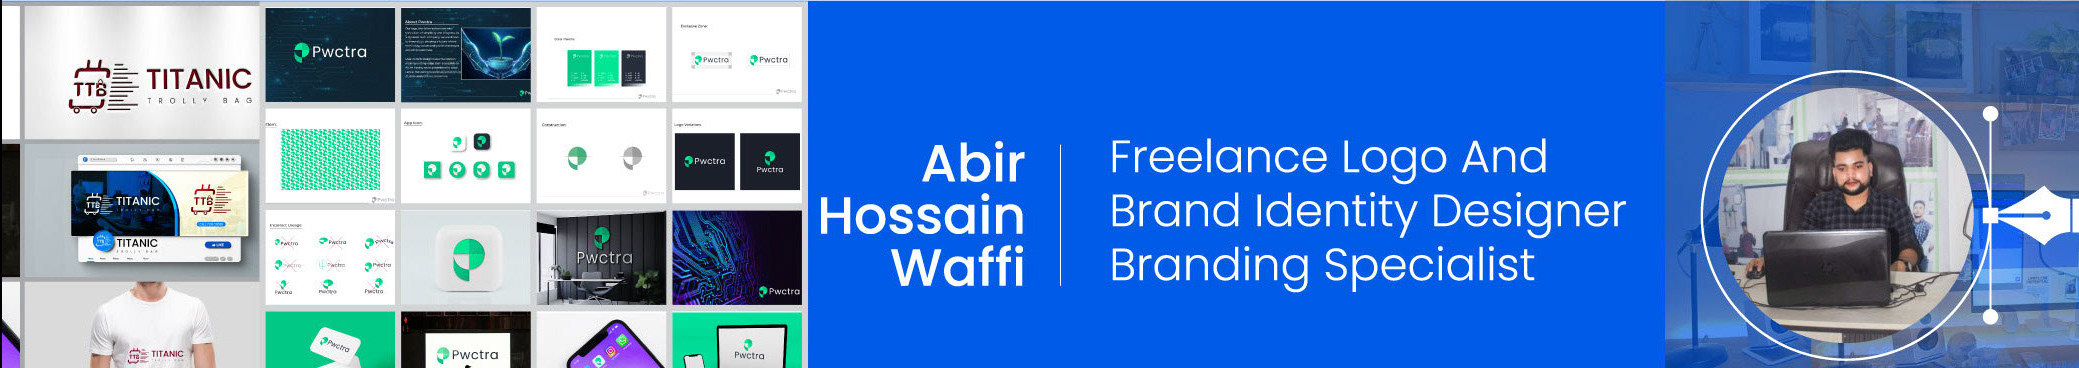 Abir Hossain Waffi's profile banner